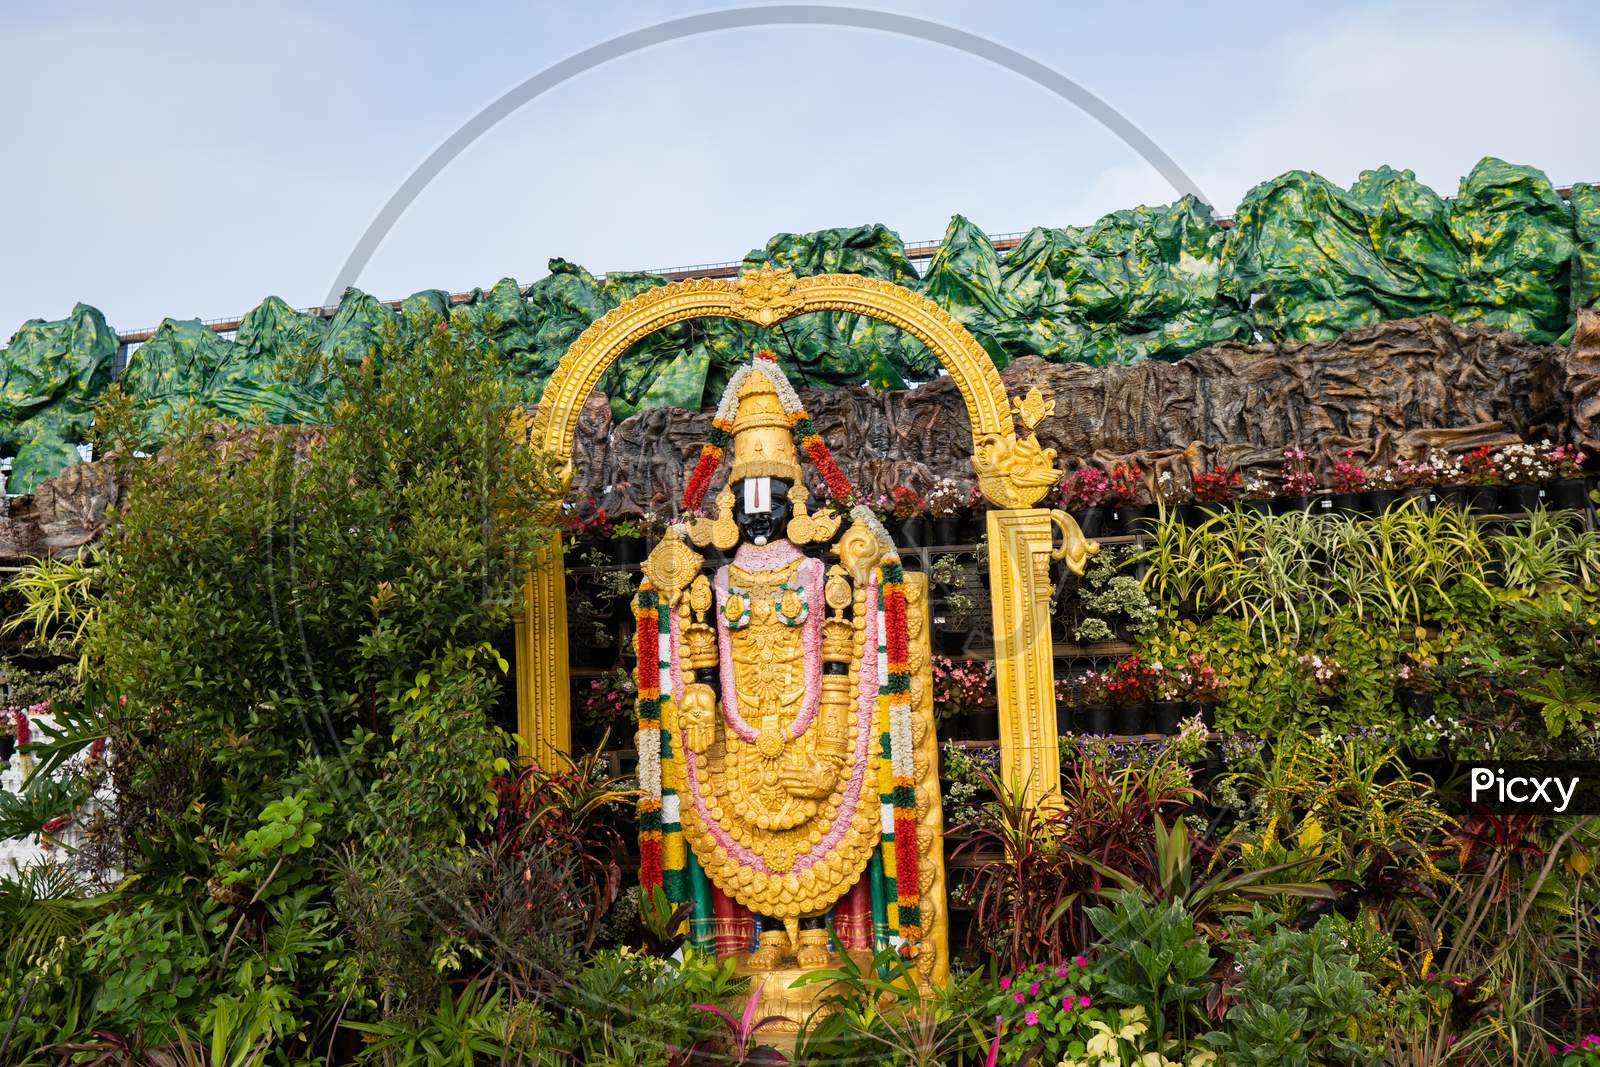 Lord Sri Venkateswara Swami statue in the Garden beside the road